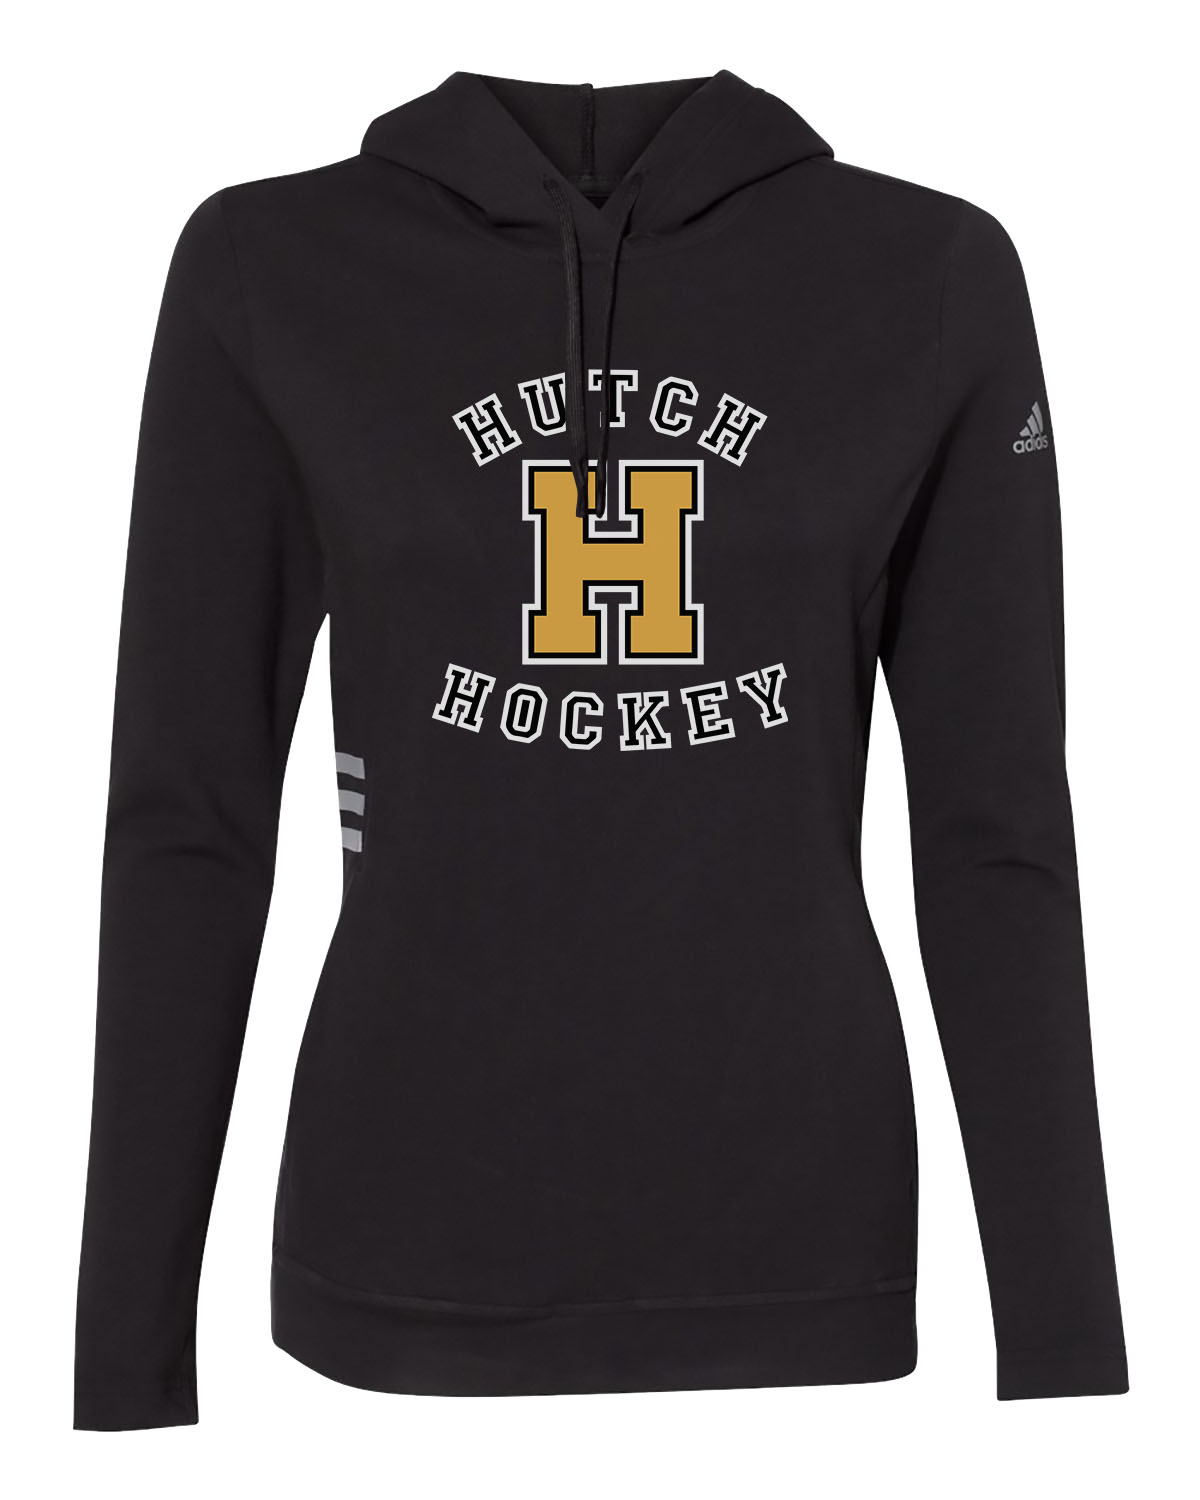 Hutchinson Girls Hockey // Women's Lightweight Hoodie - Adidas